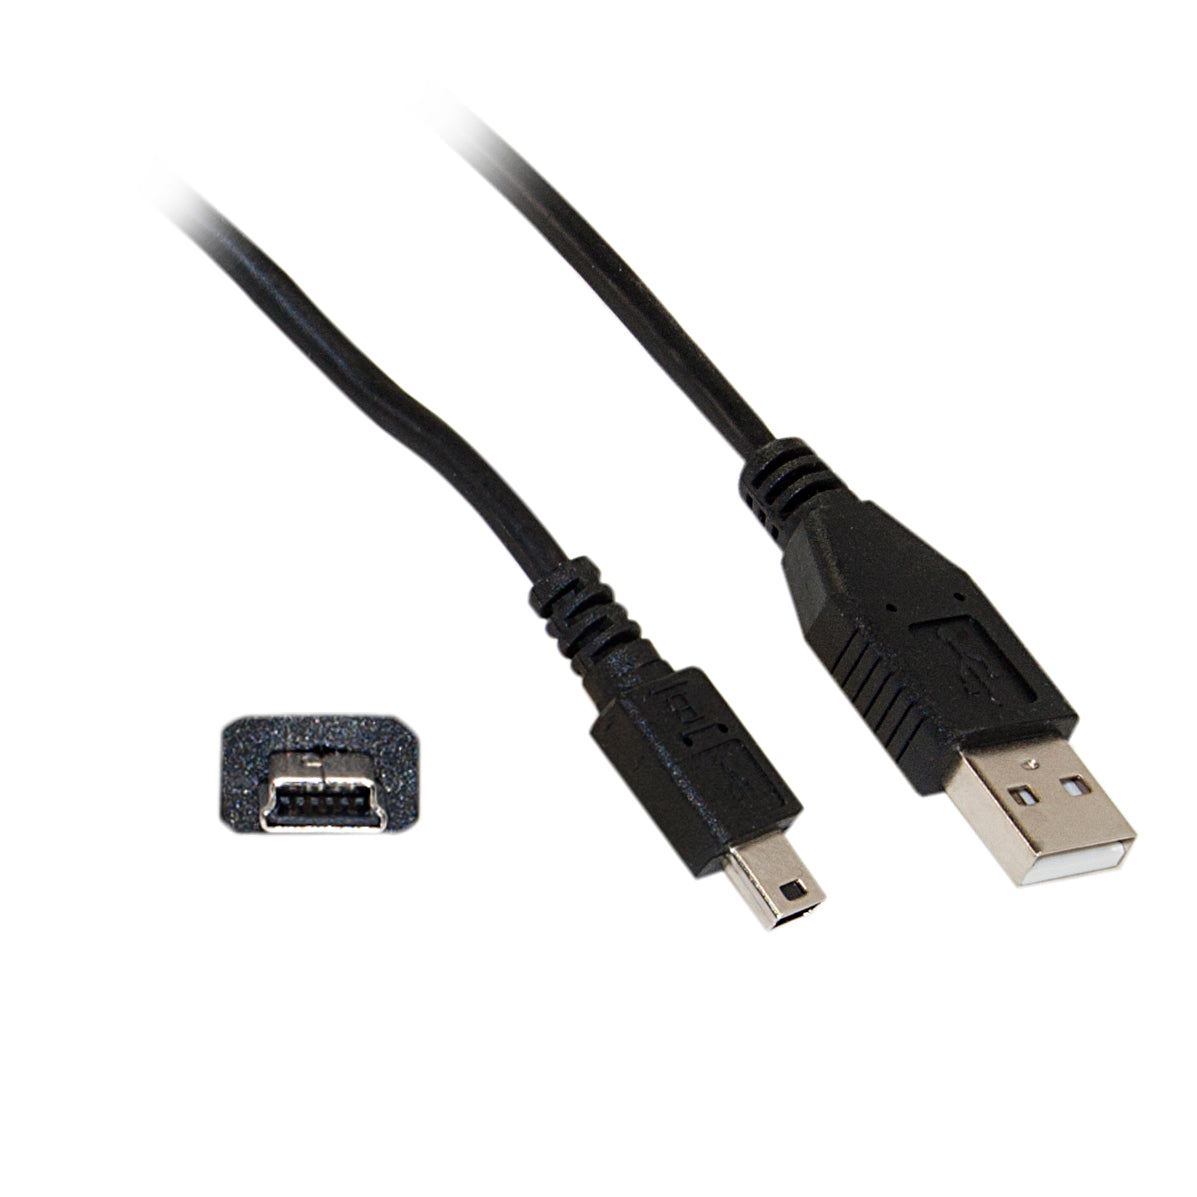  15 Foot USB A to USB Mini B 5-Pin 2.0 Camera Cable